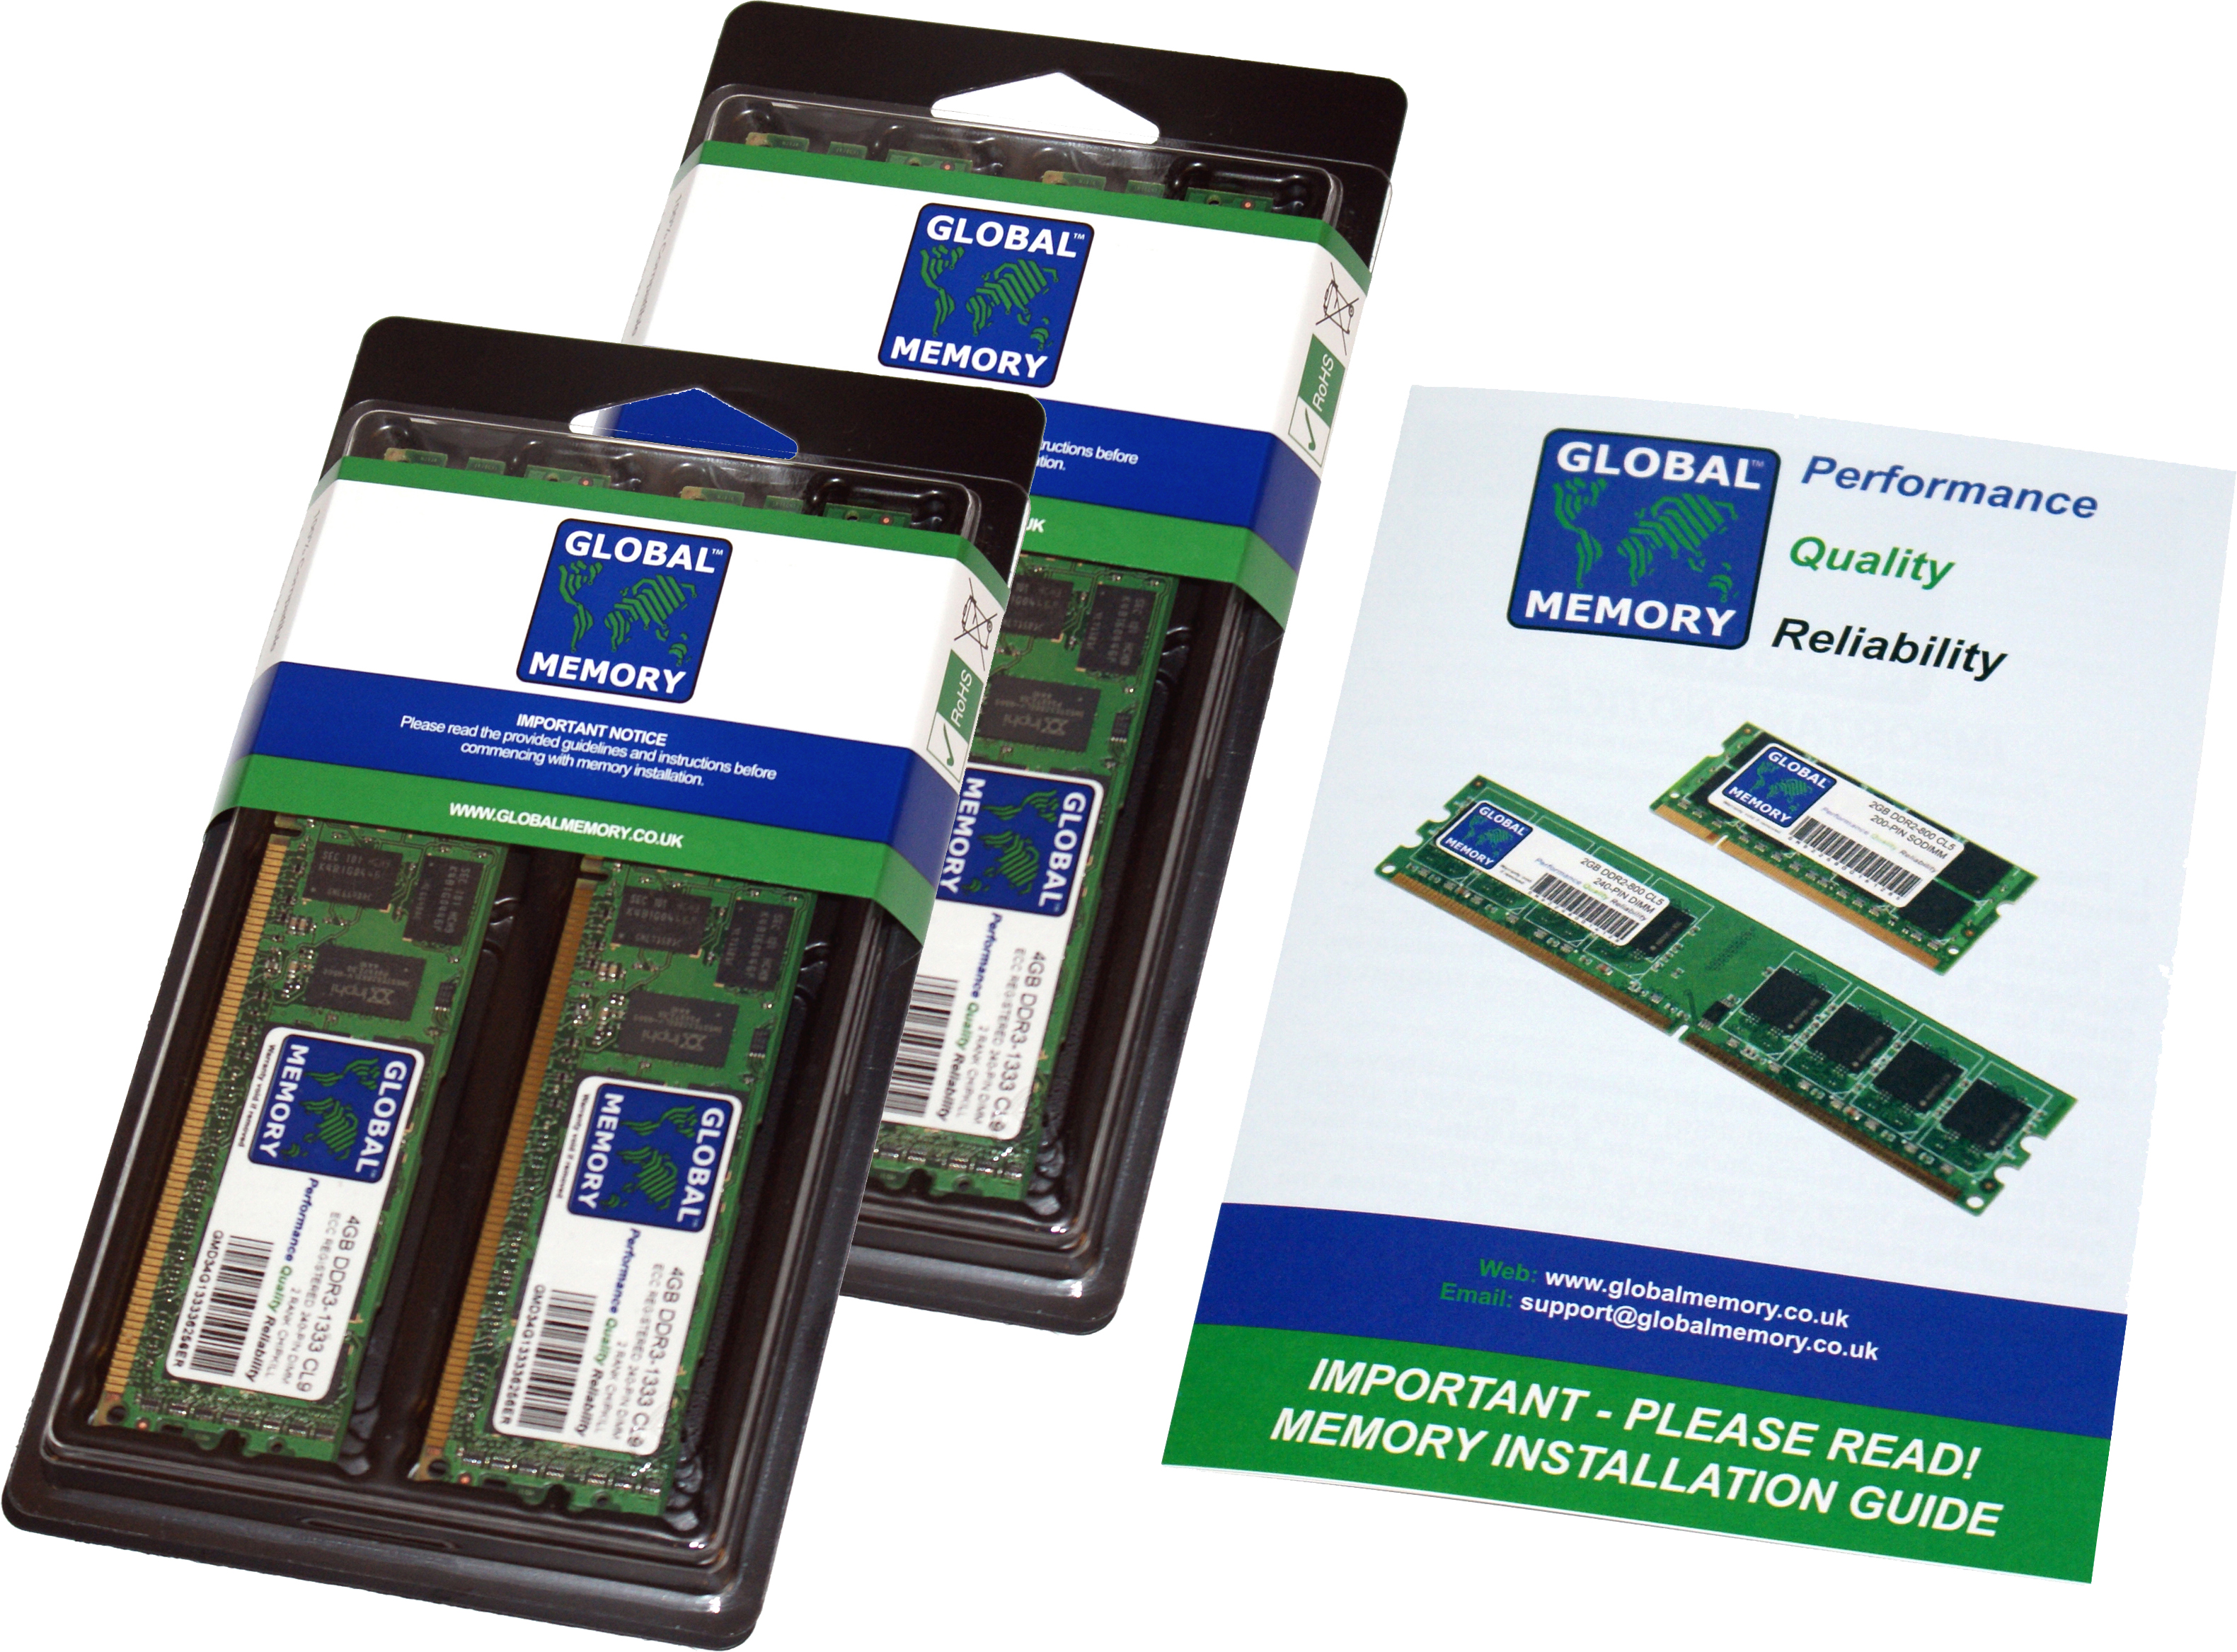 128GB (4 x 32GB) DDR4 3200MHz PC4-25600 288-PIN ECC REGISTERED DIMM (RDIMM) MEMORY RAM KIT FOR FUJITSU SERVERS/WORKSTATIONS (8 RANK KIT CHIPKILL)